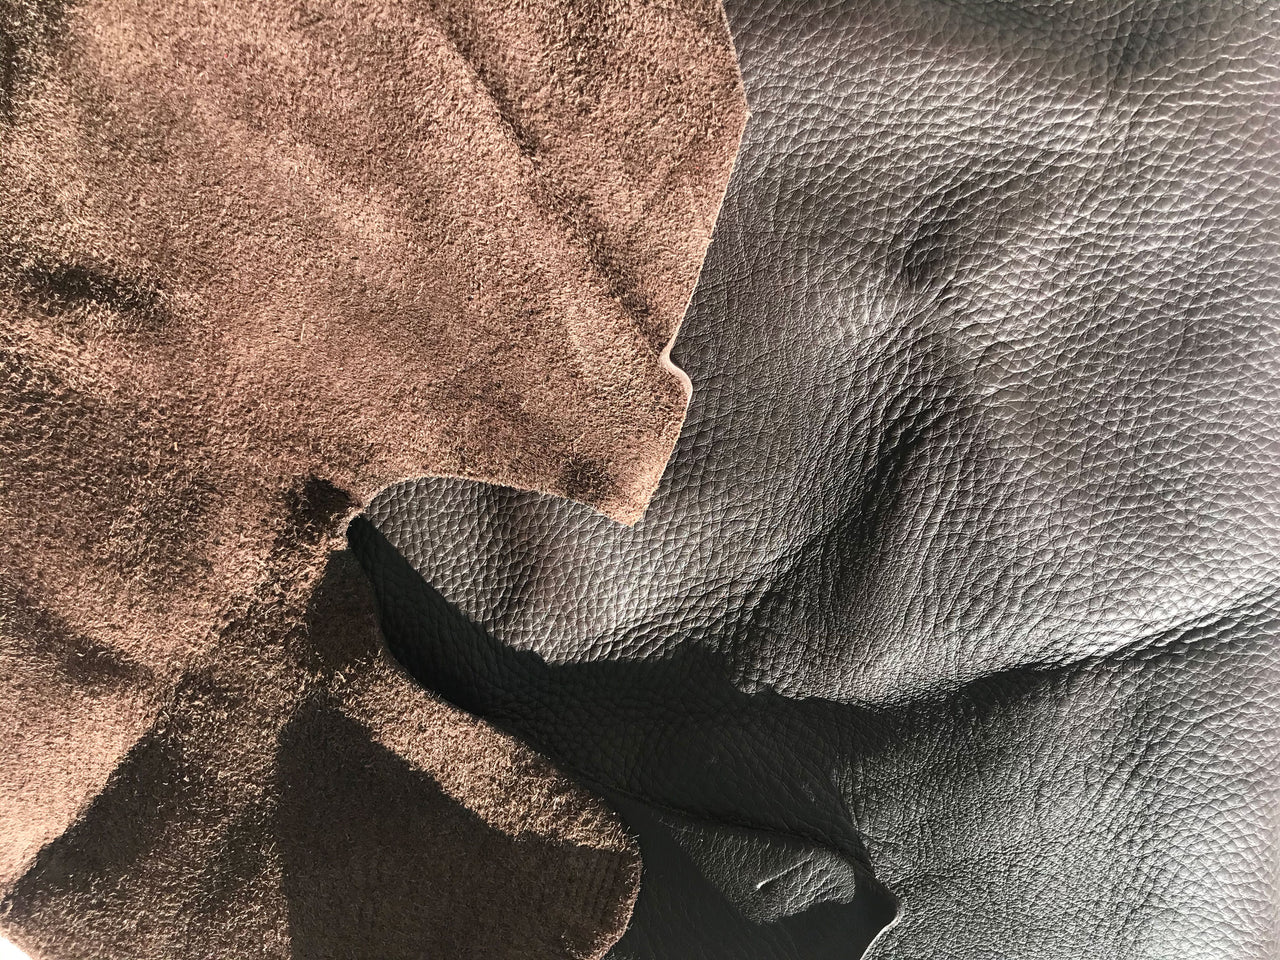 Leather Remnants - Multiple colors large pieces